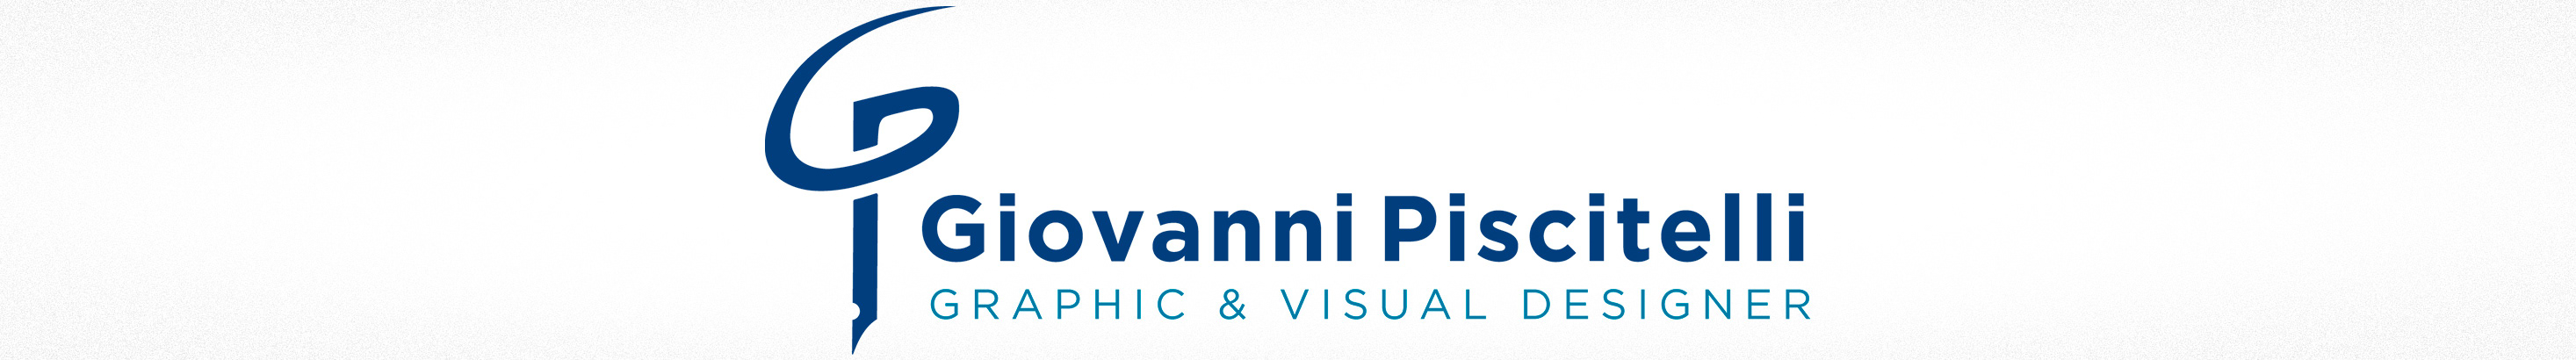 Giovanni Piscitelli's profile banner